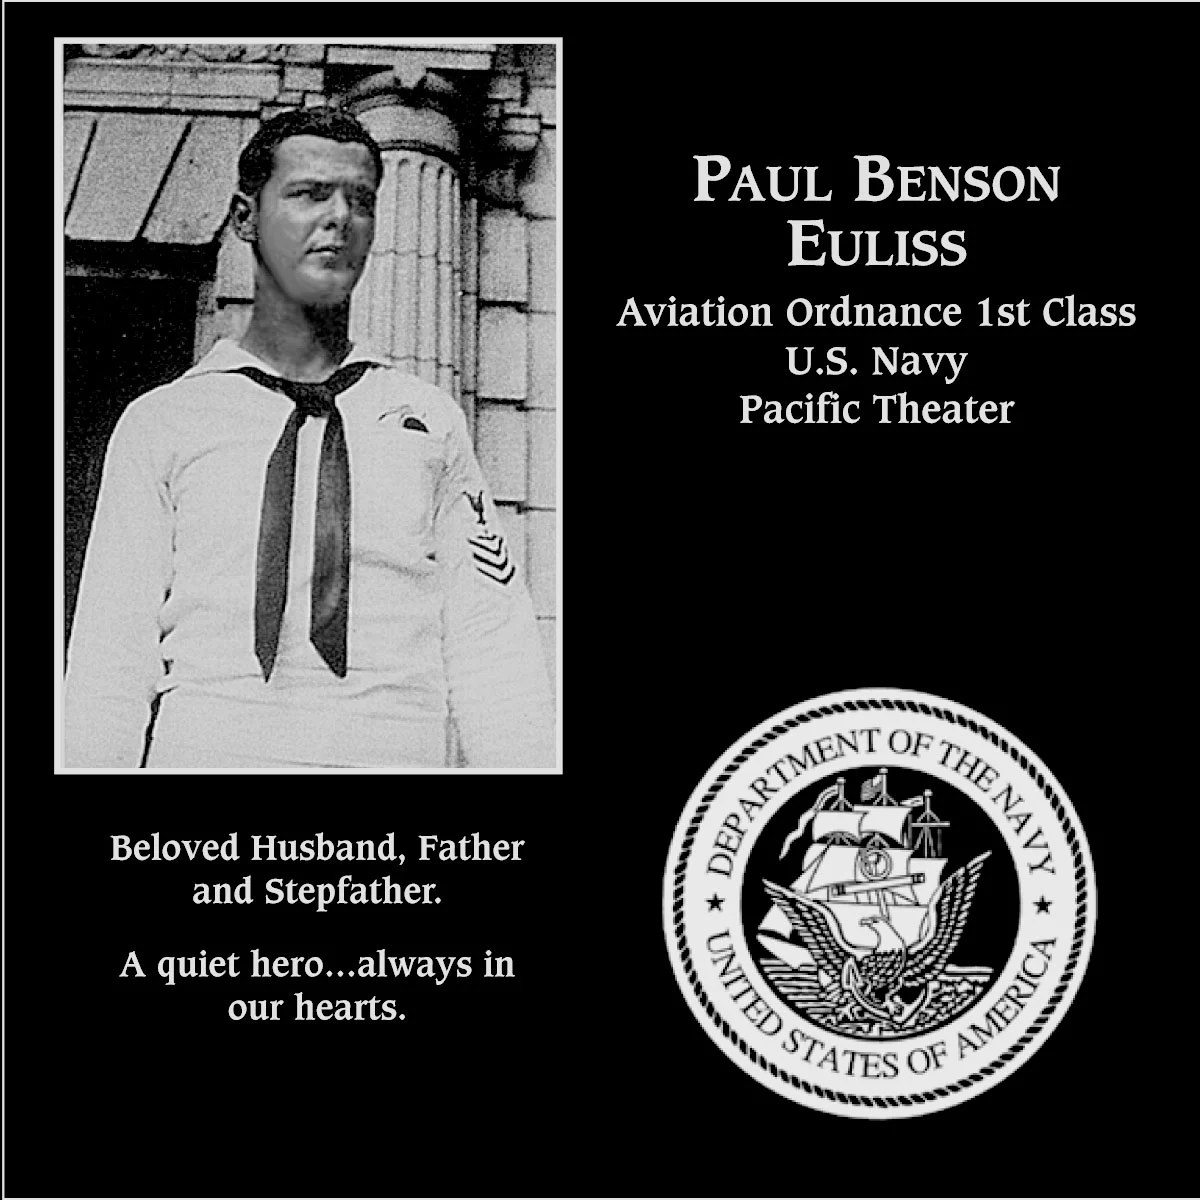 Paul Benson Euliss